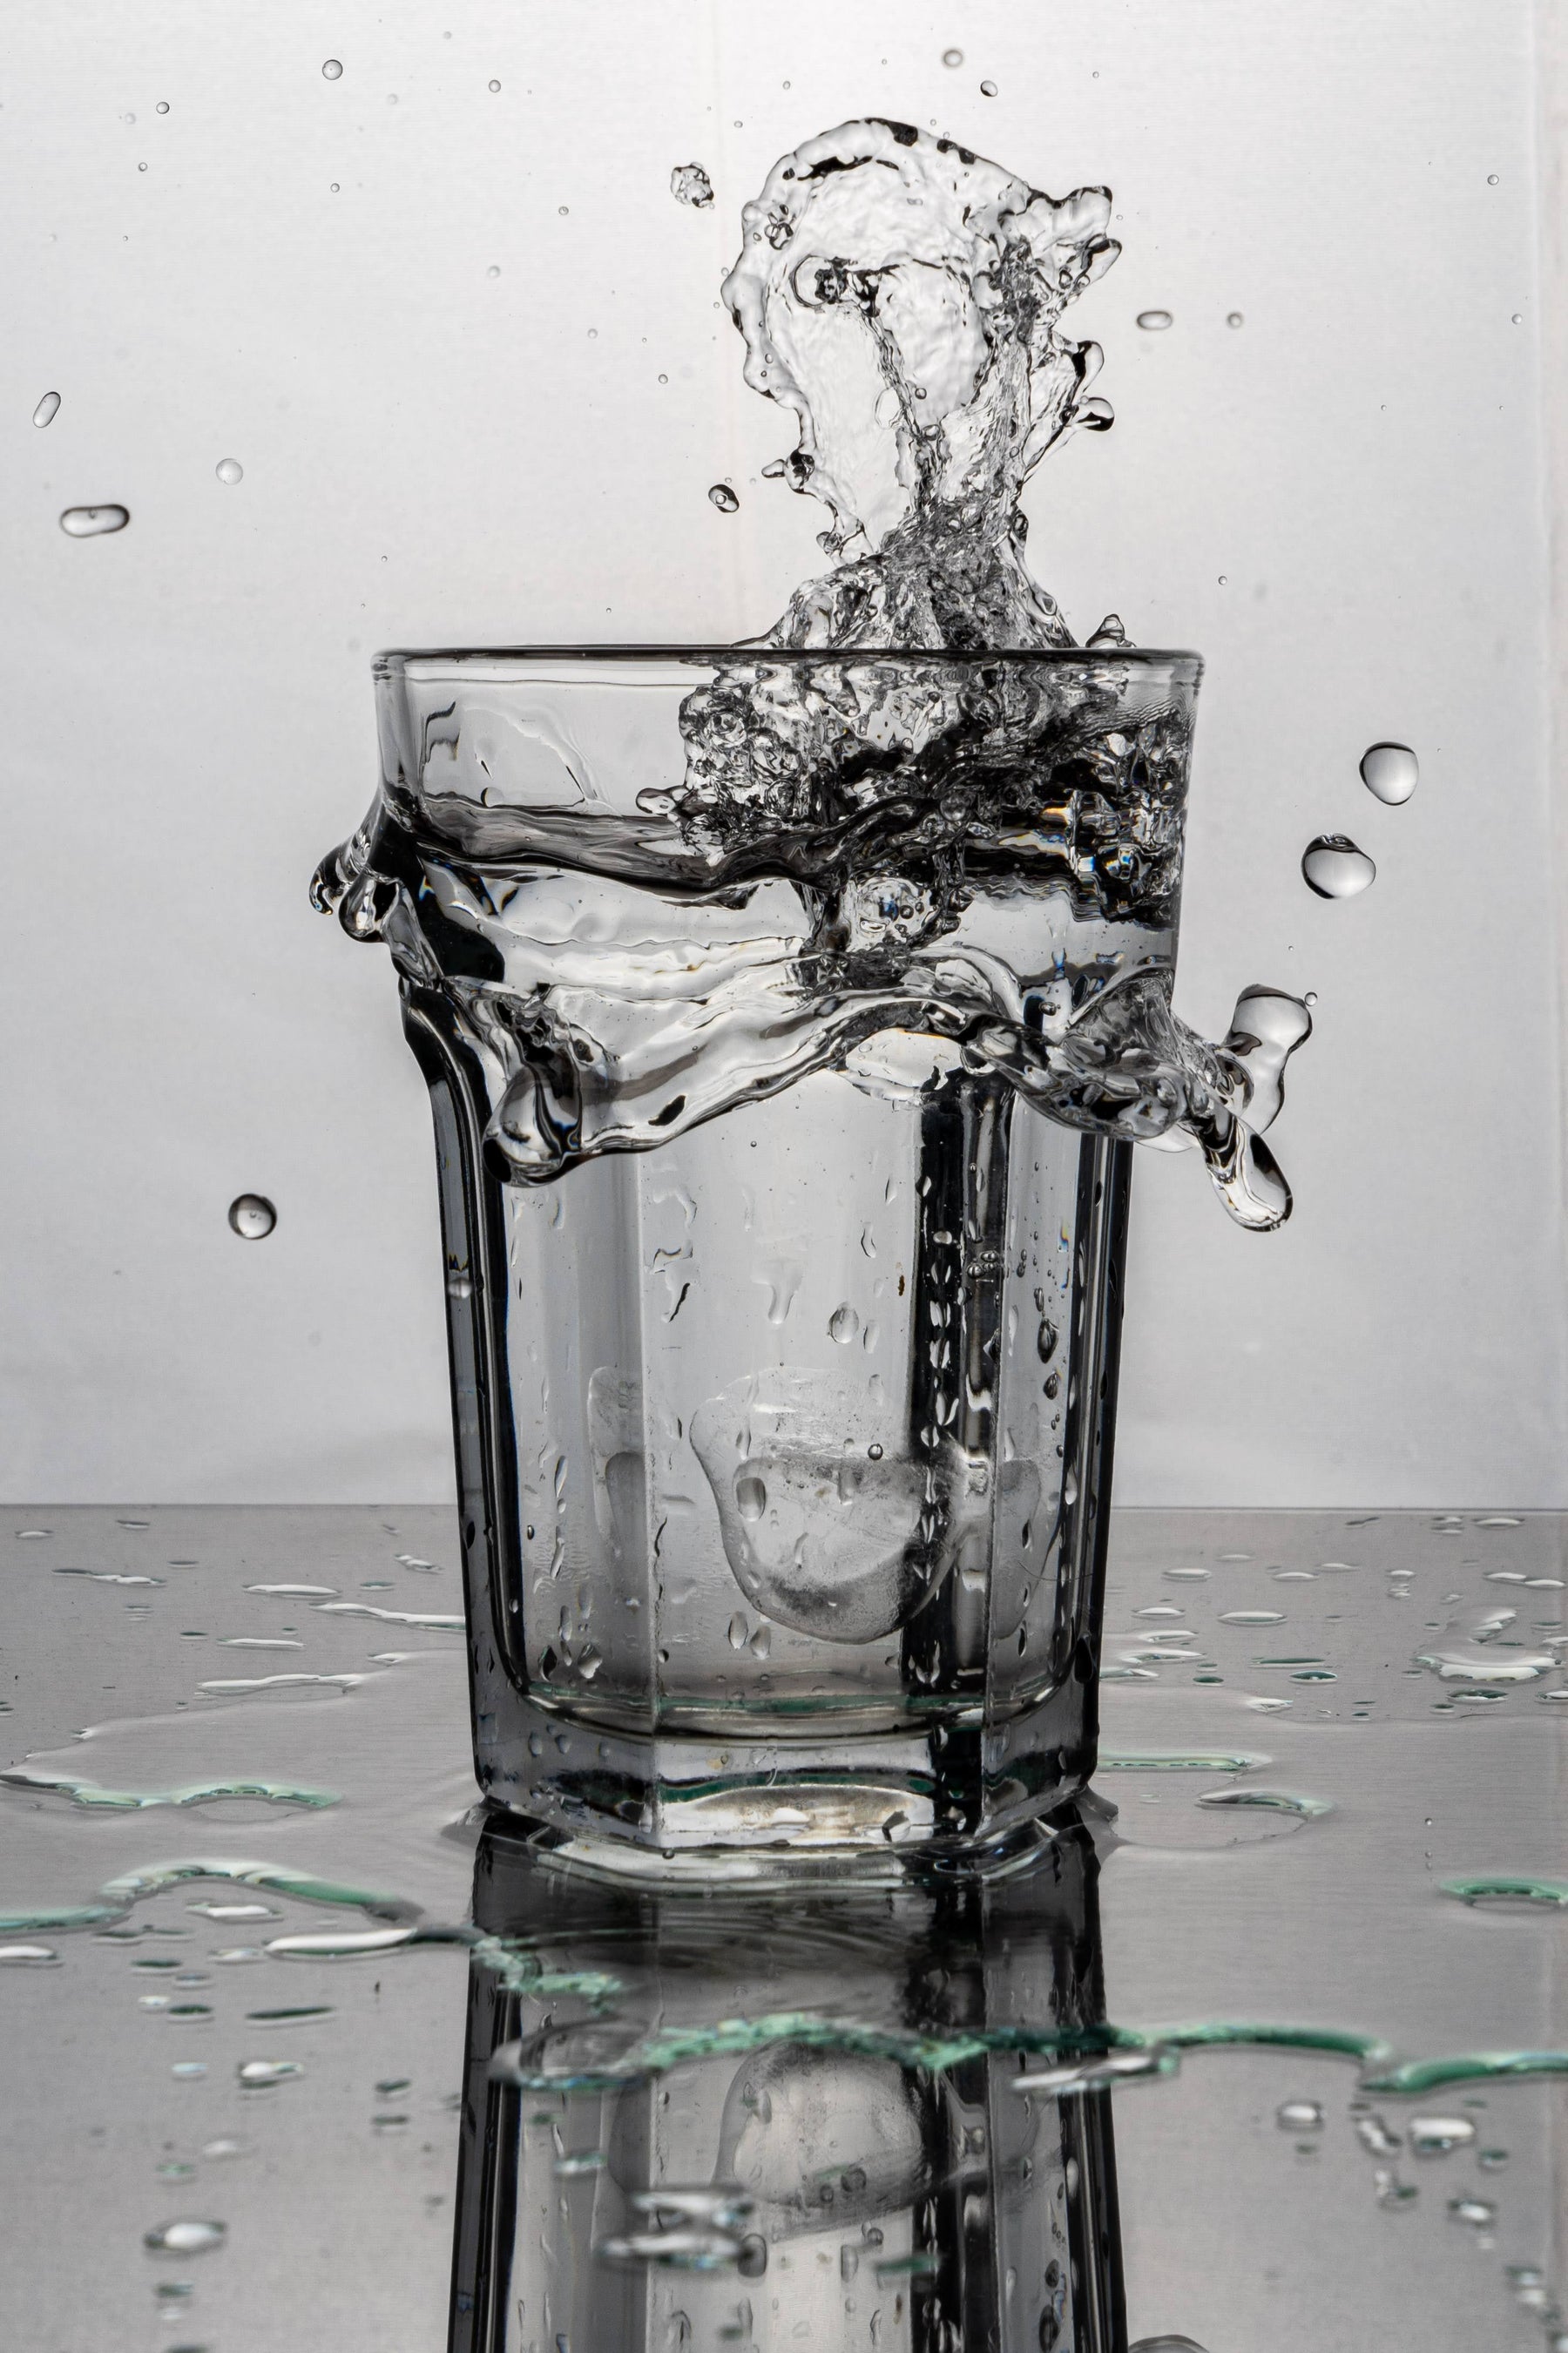 Reverse Osmosis vs Distilled Water